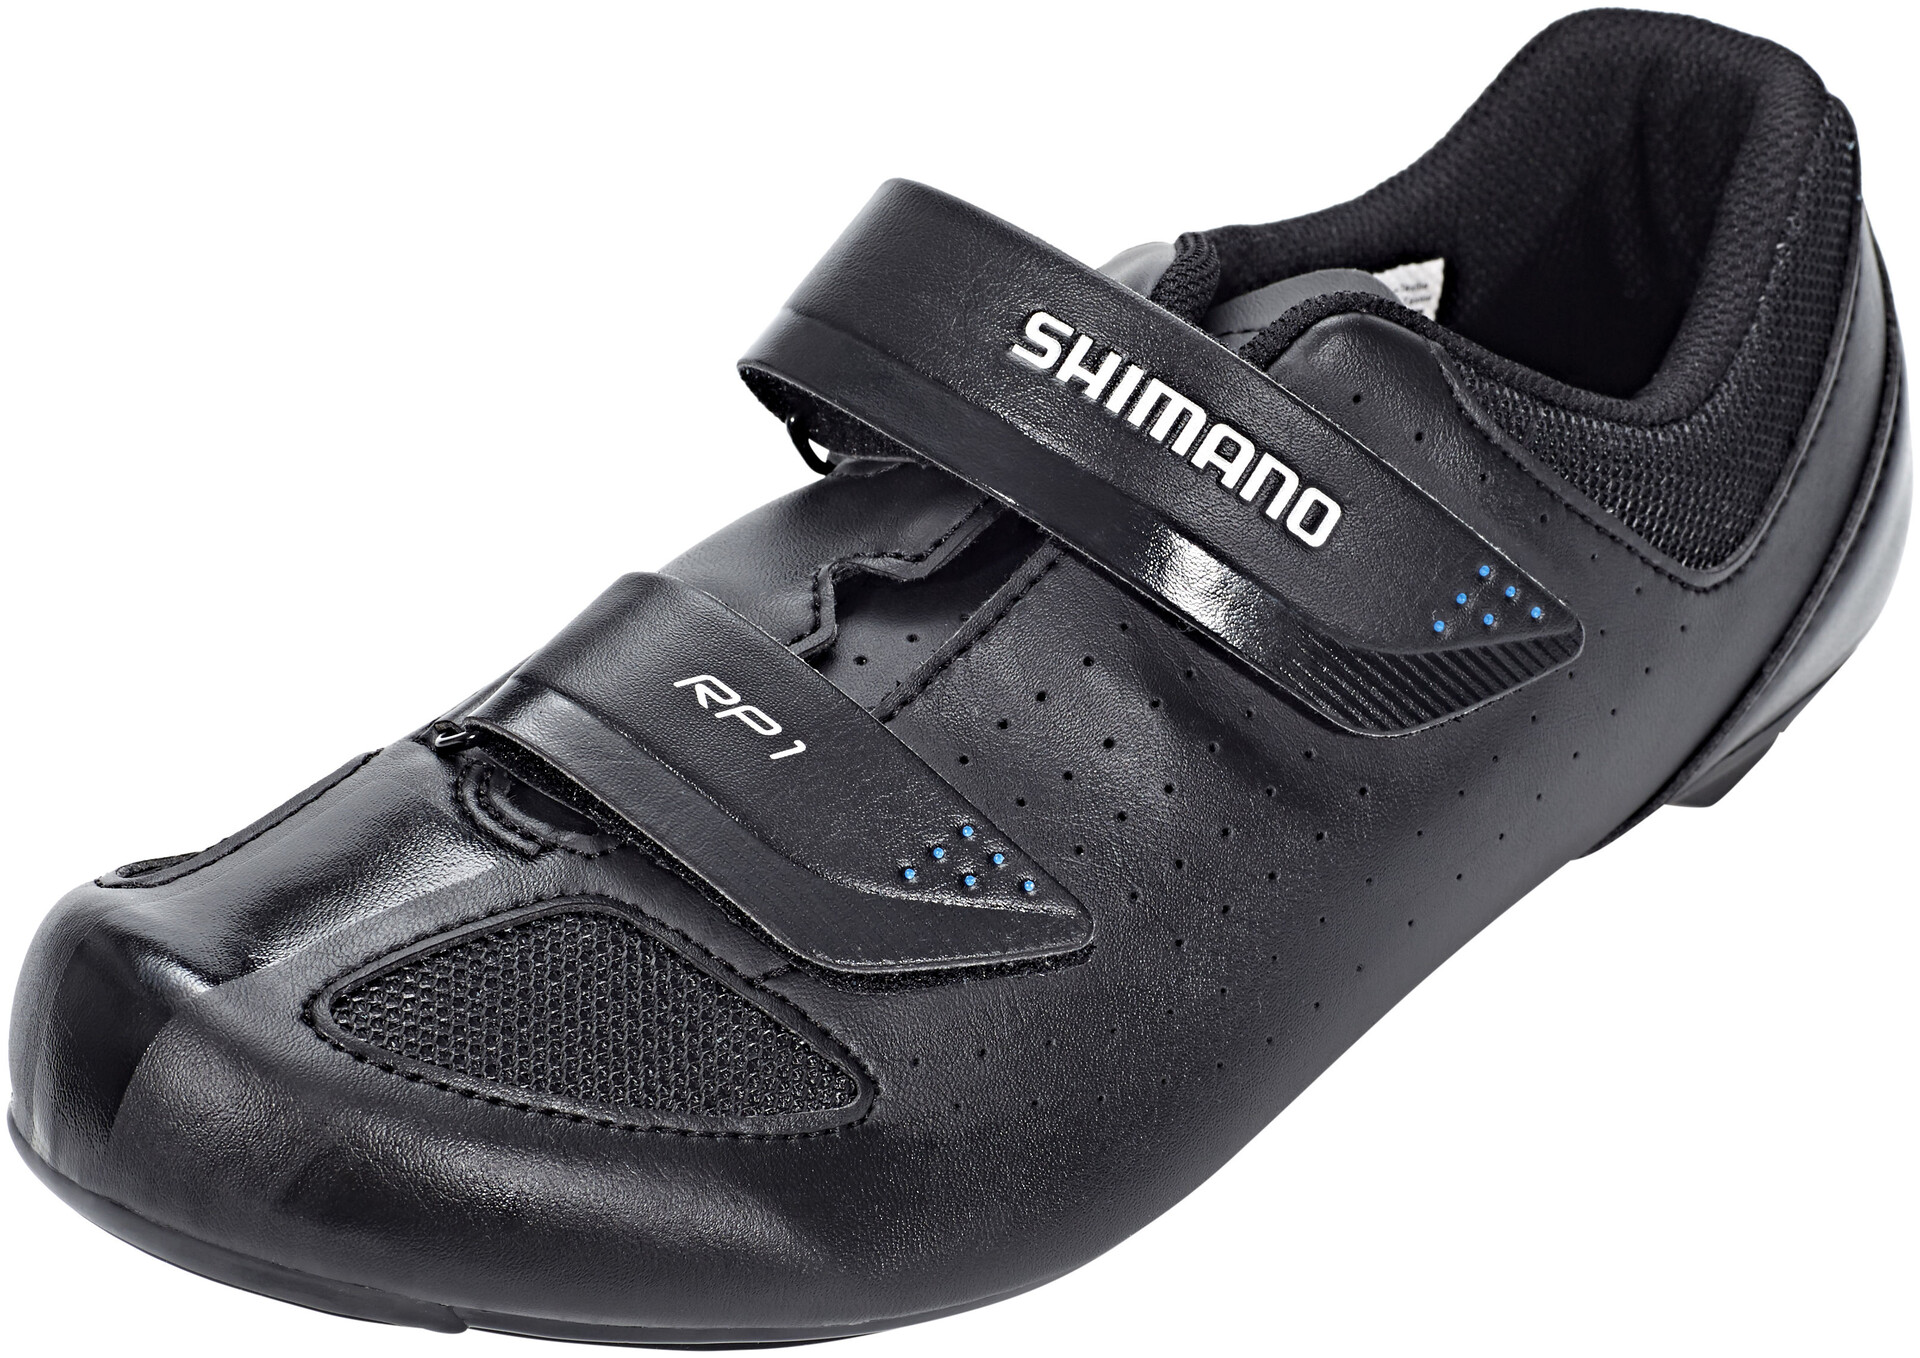 shimano rp1 road cycling shoes